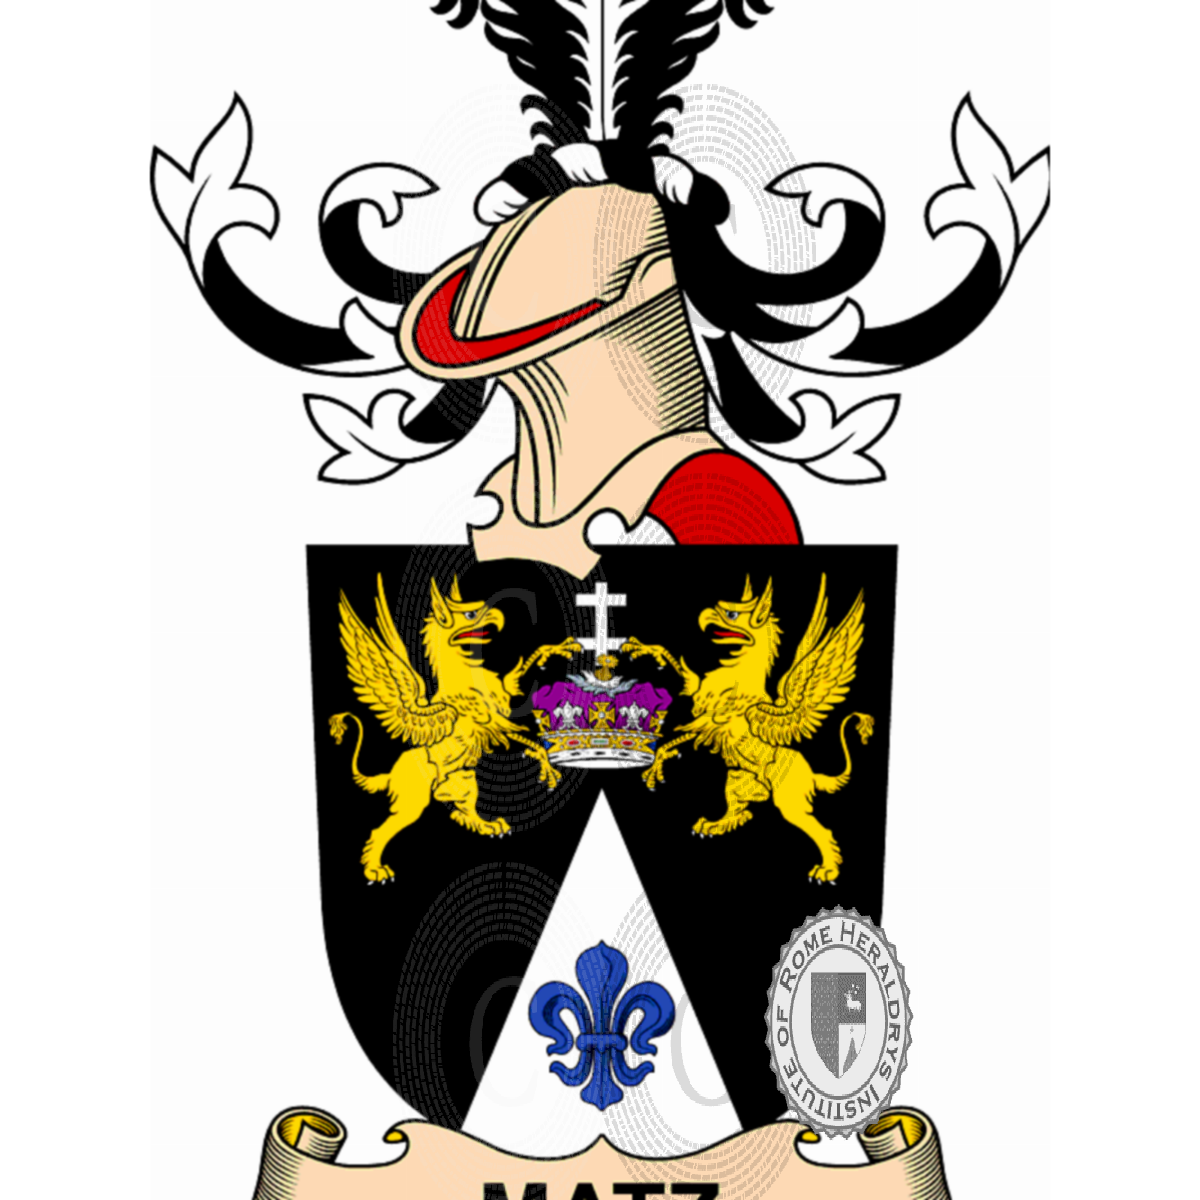 Wappen der FamilieMatz